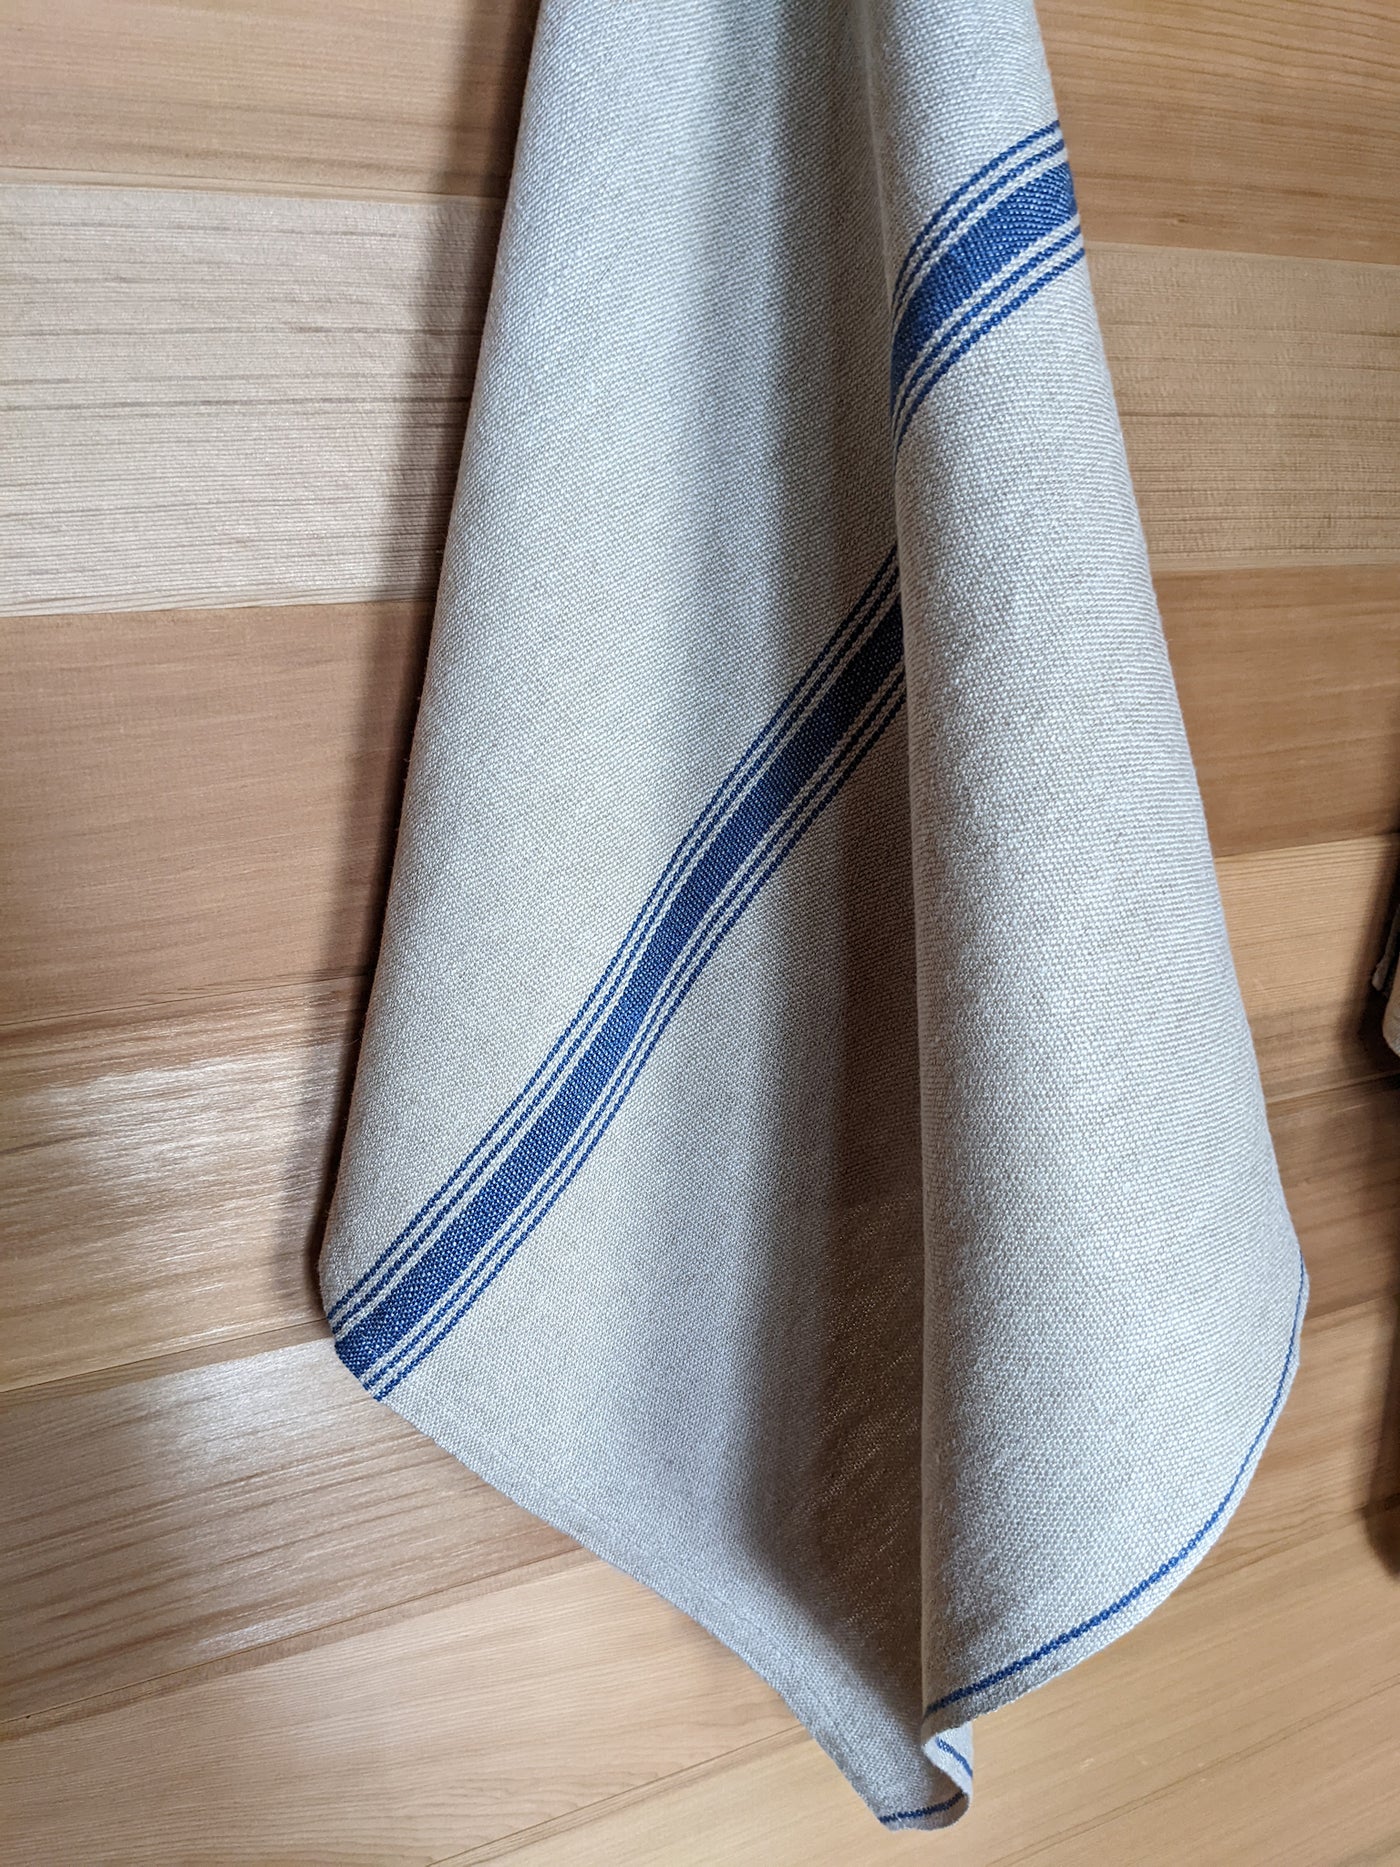 OLD WORLD Large Linen Towel